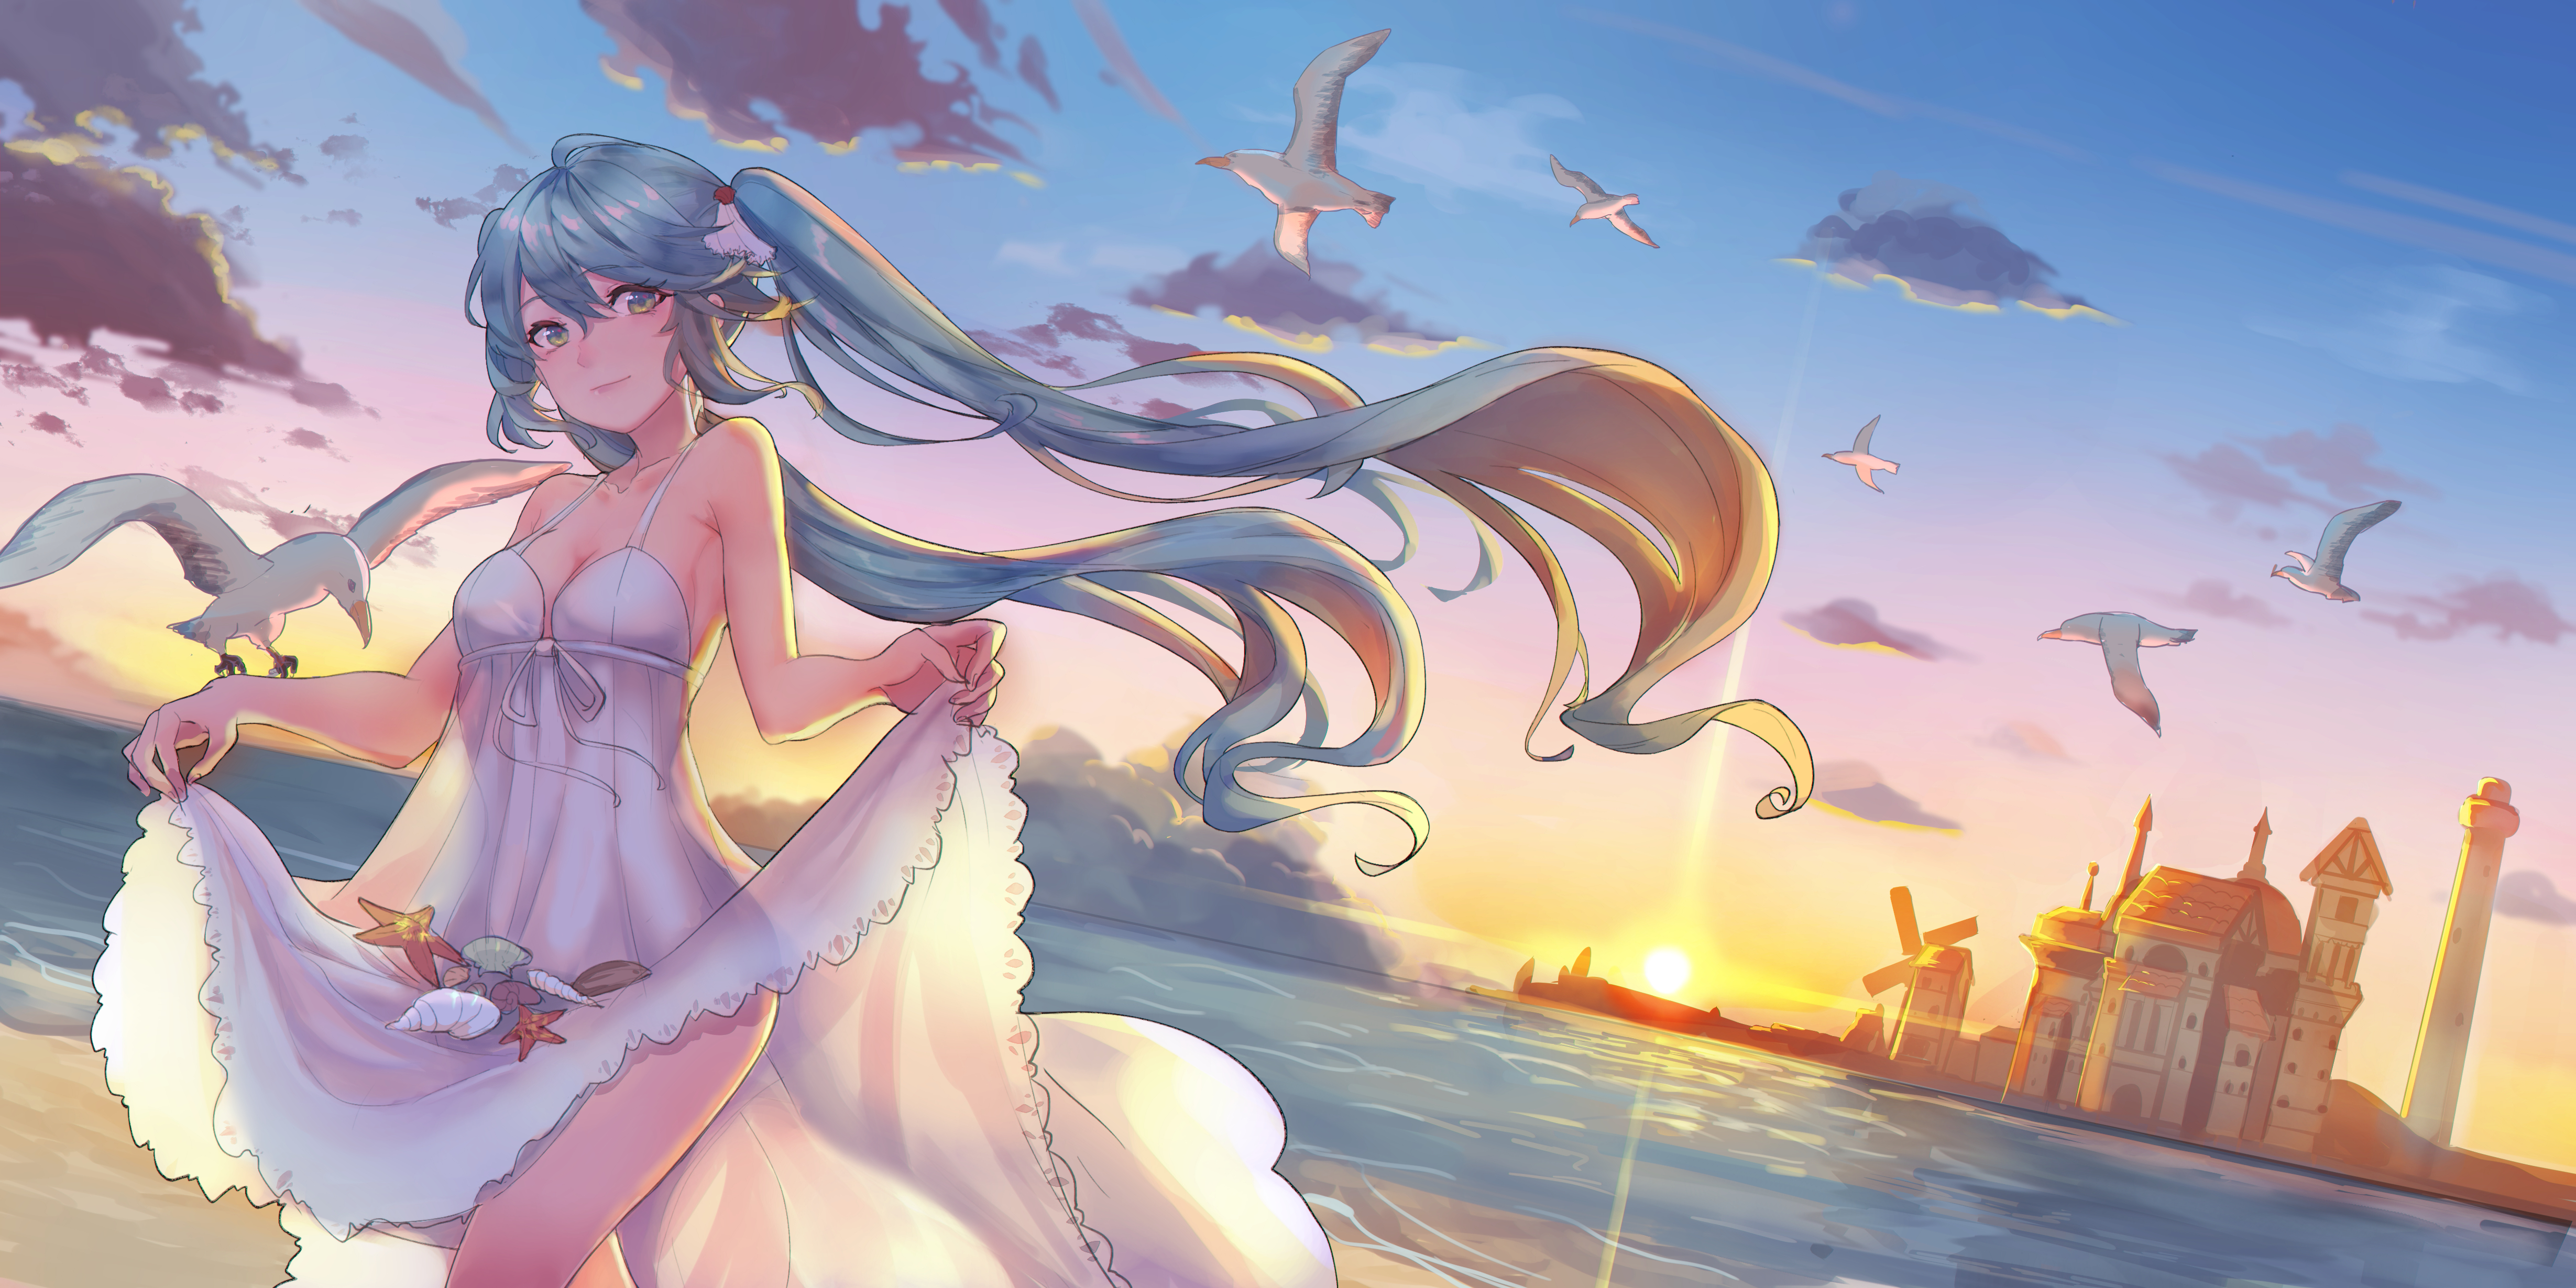 Anime 4917x2459 anime girls Vocaloid Hatsune Miku Ice (artist) smiling lifting dress sun dress beach